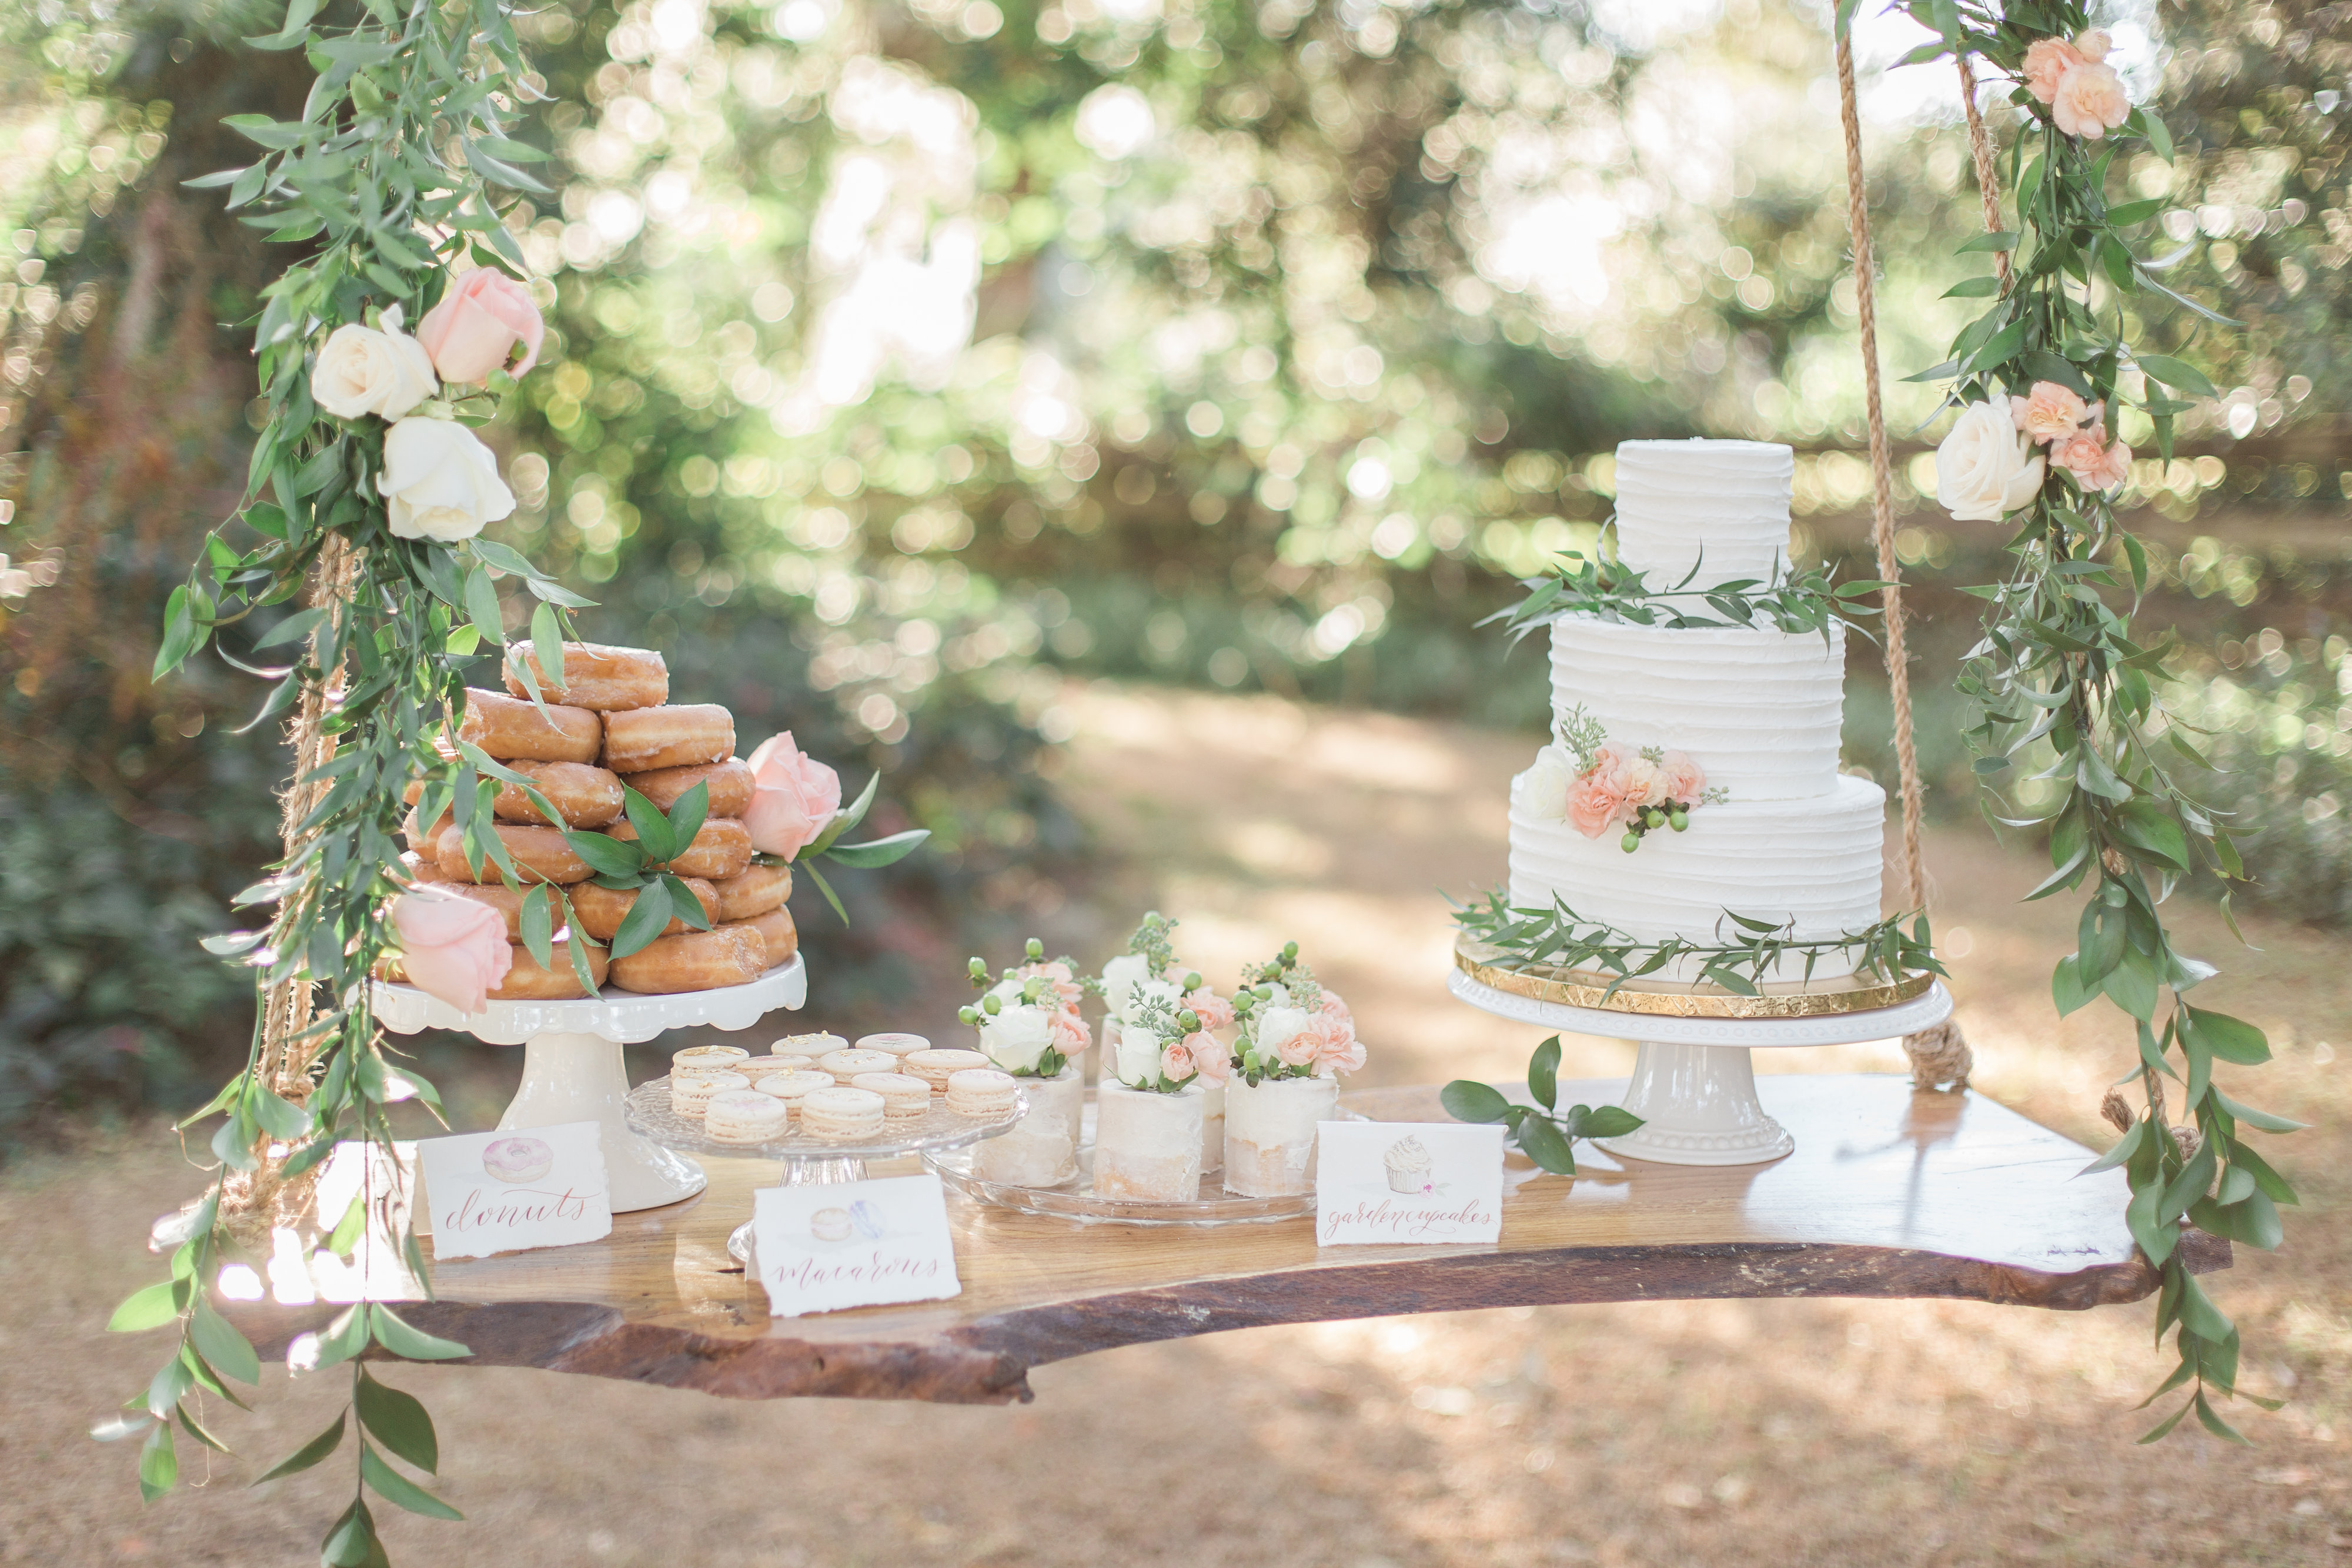 Southern Garden Chic Wedding Inspiration, garden wedding, cake swing, rustic wedding dessert table, rustic wedding